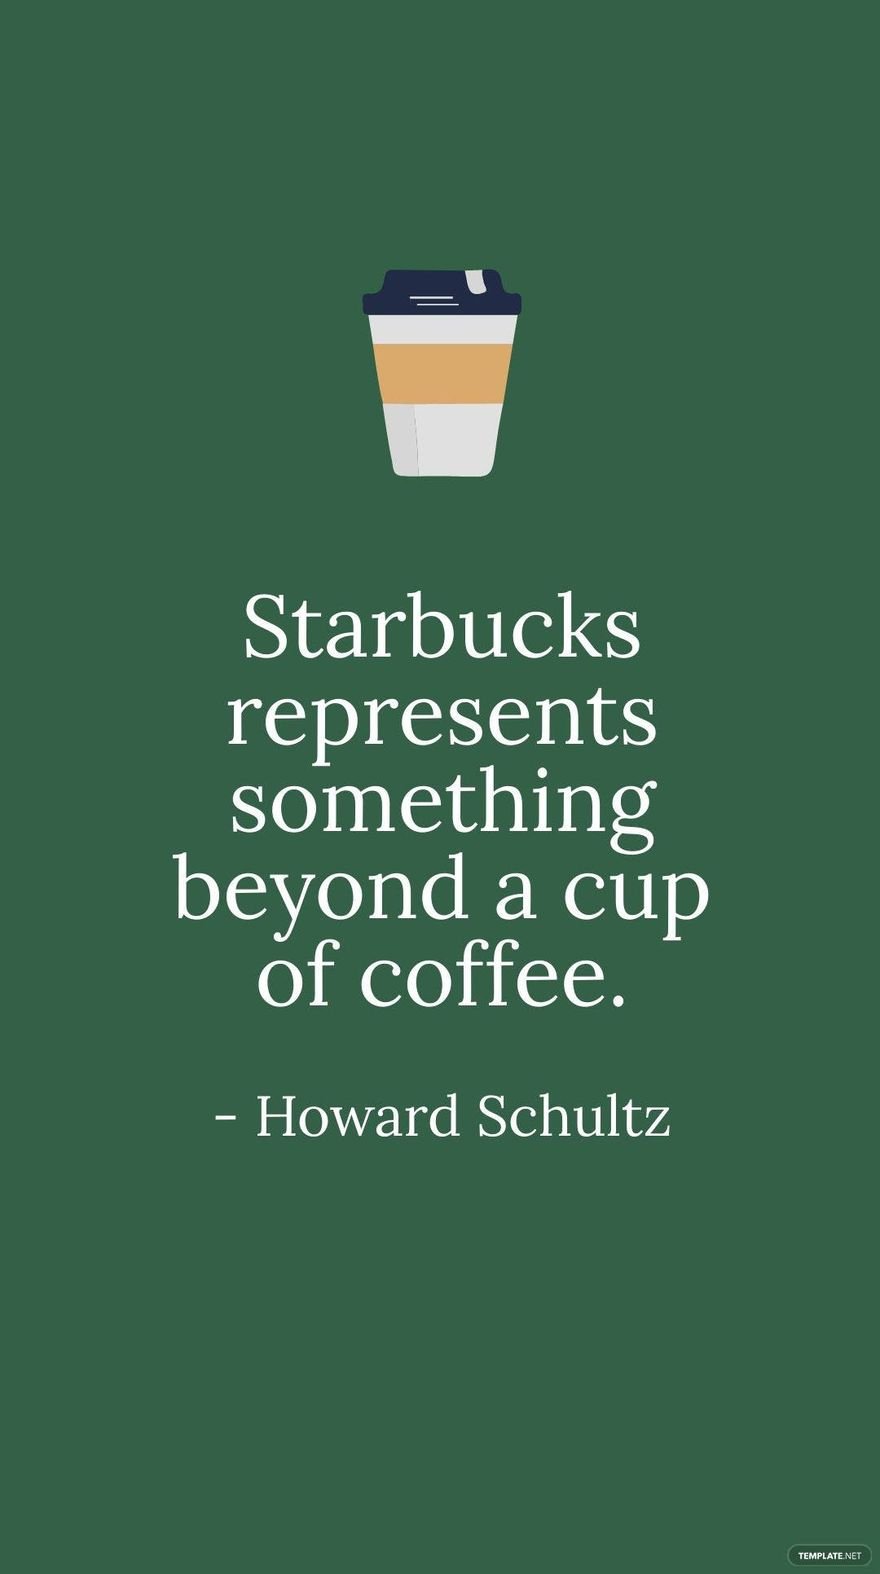 Free Howard Schultz - Starbucks represents something beyond a cup of coffee. in JPG